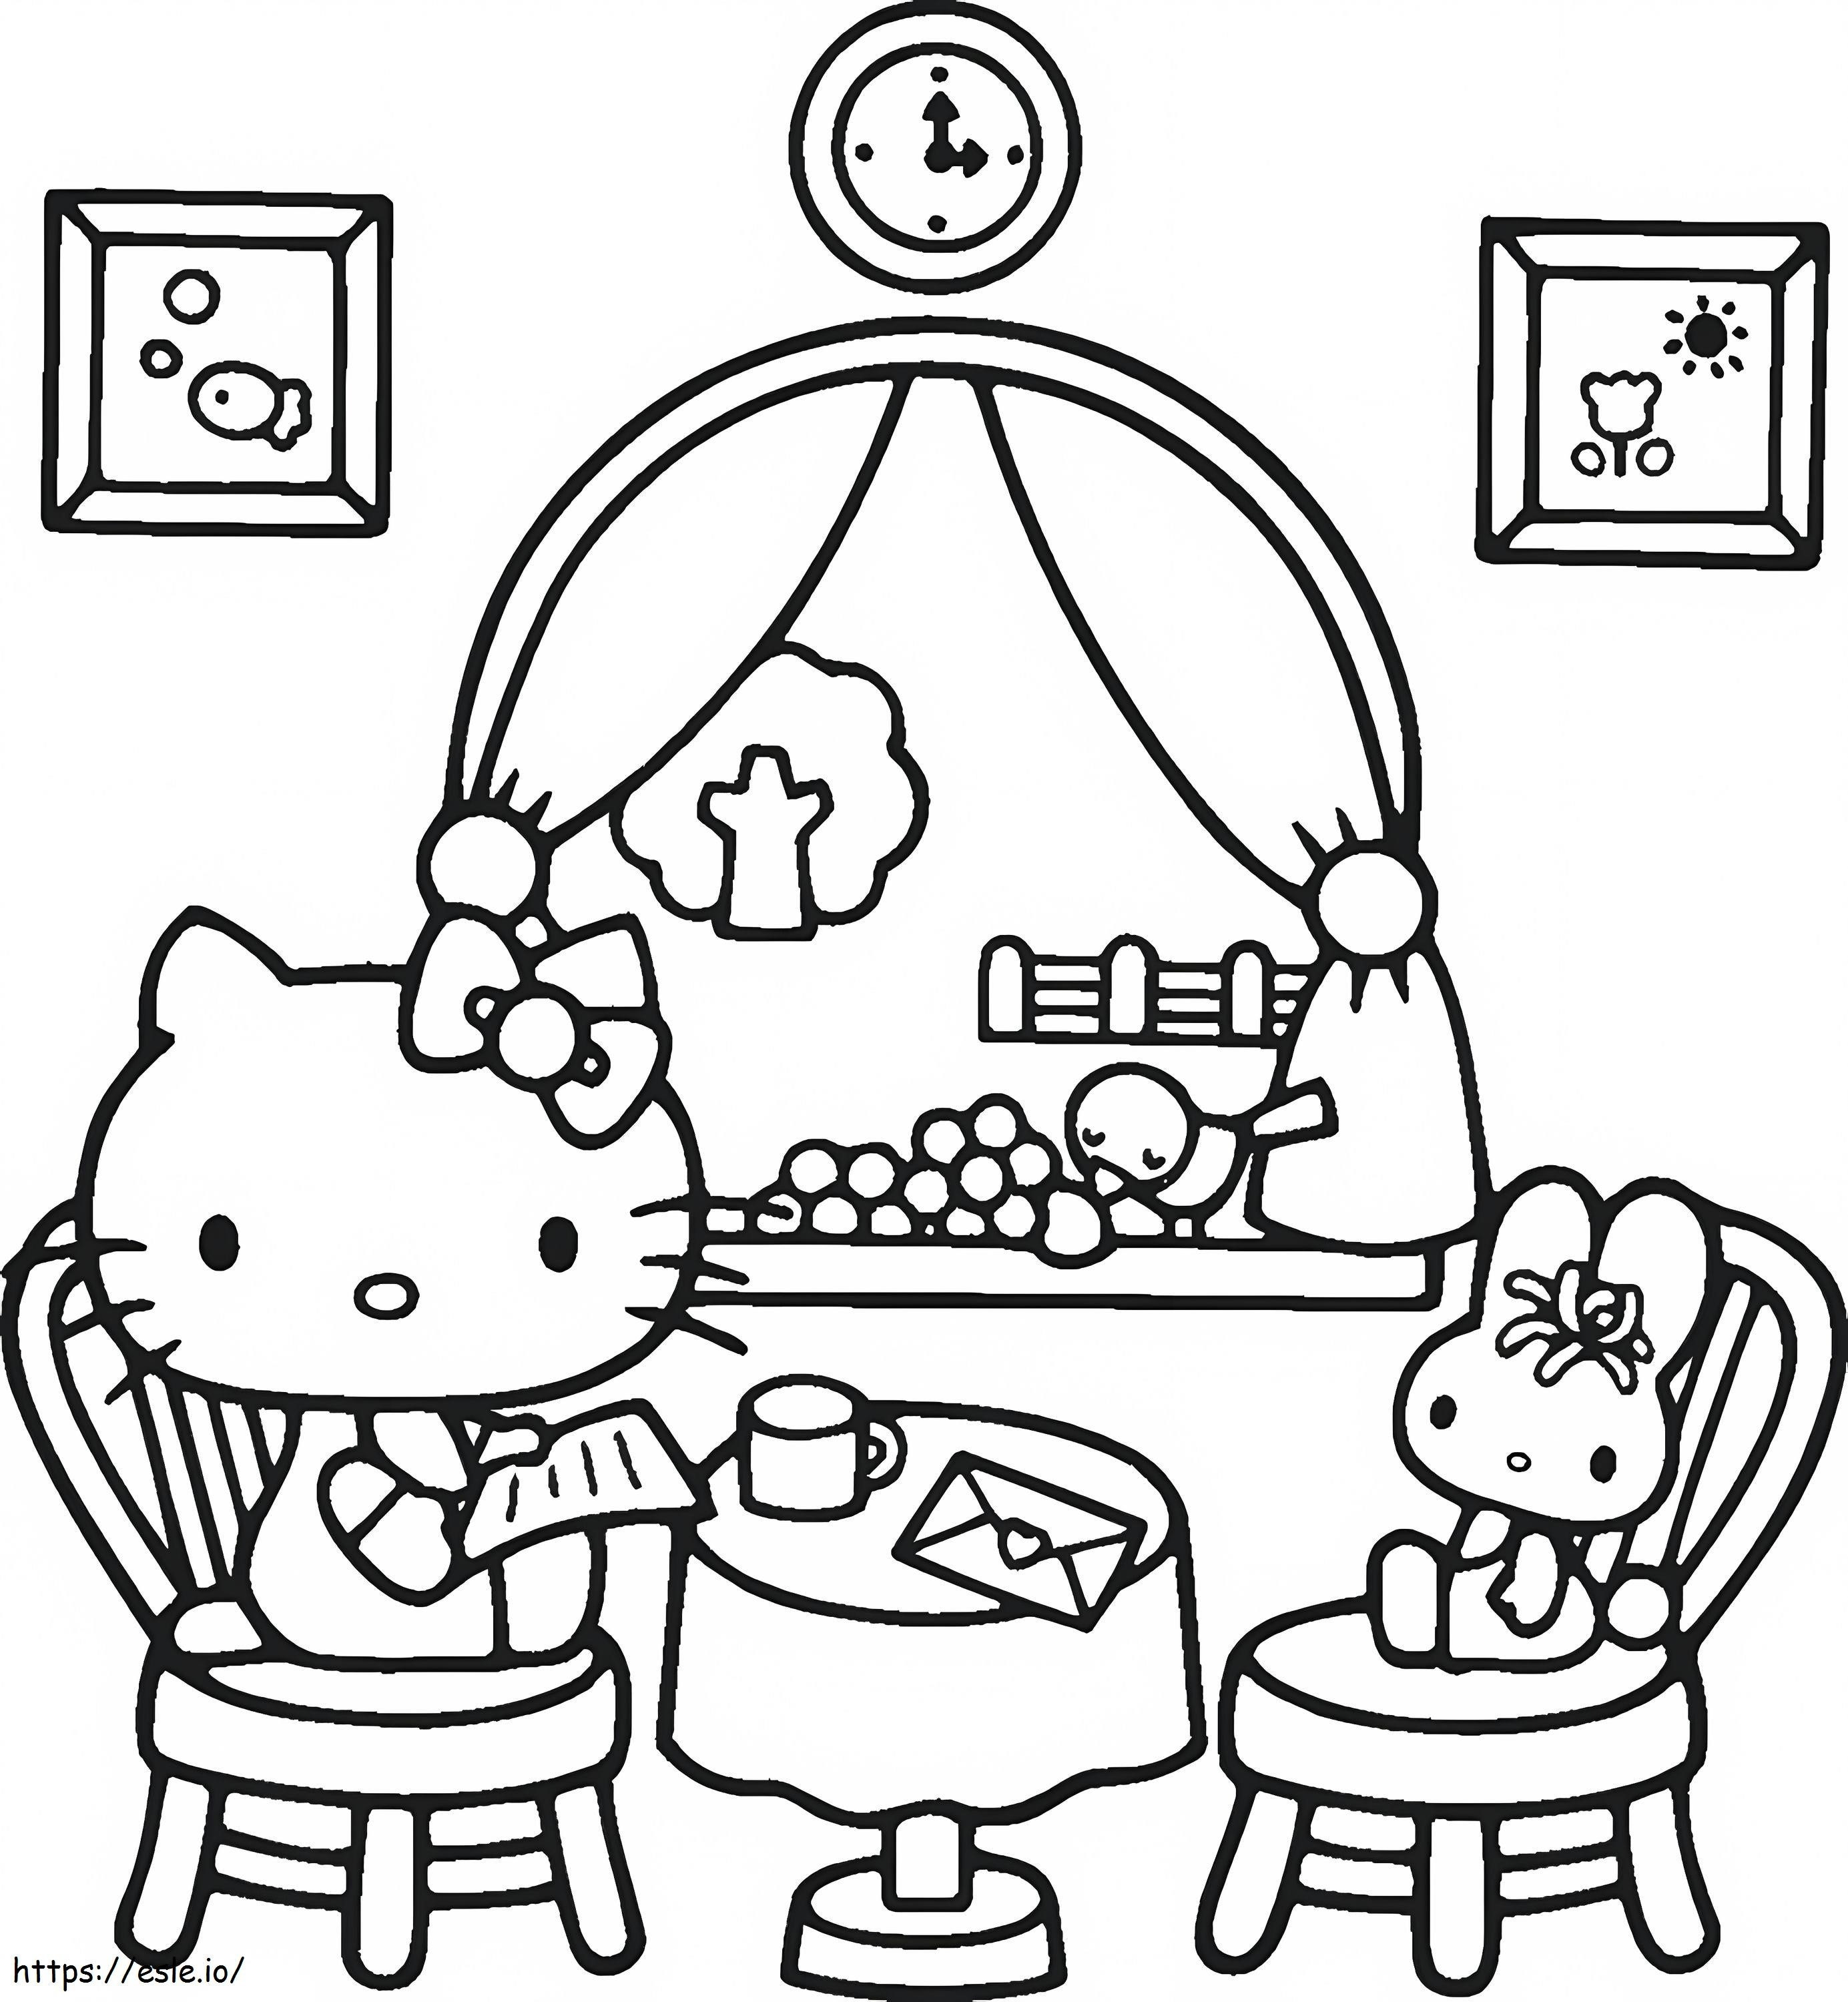 1539942005 Cómo dibujar gratis Hello Kitty Descargar para colorear